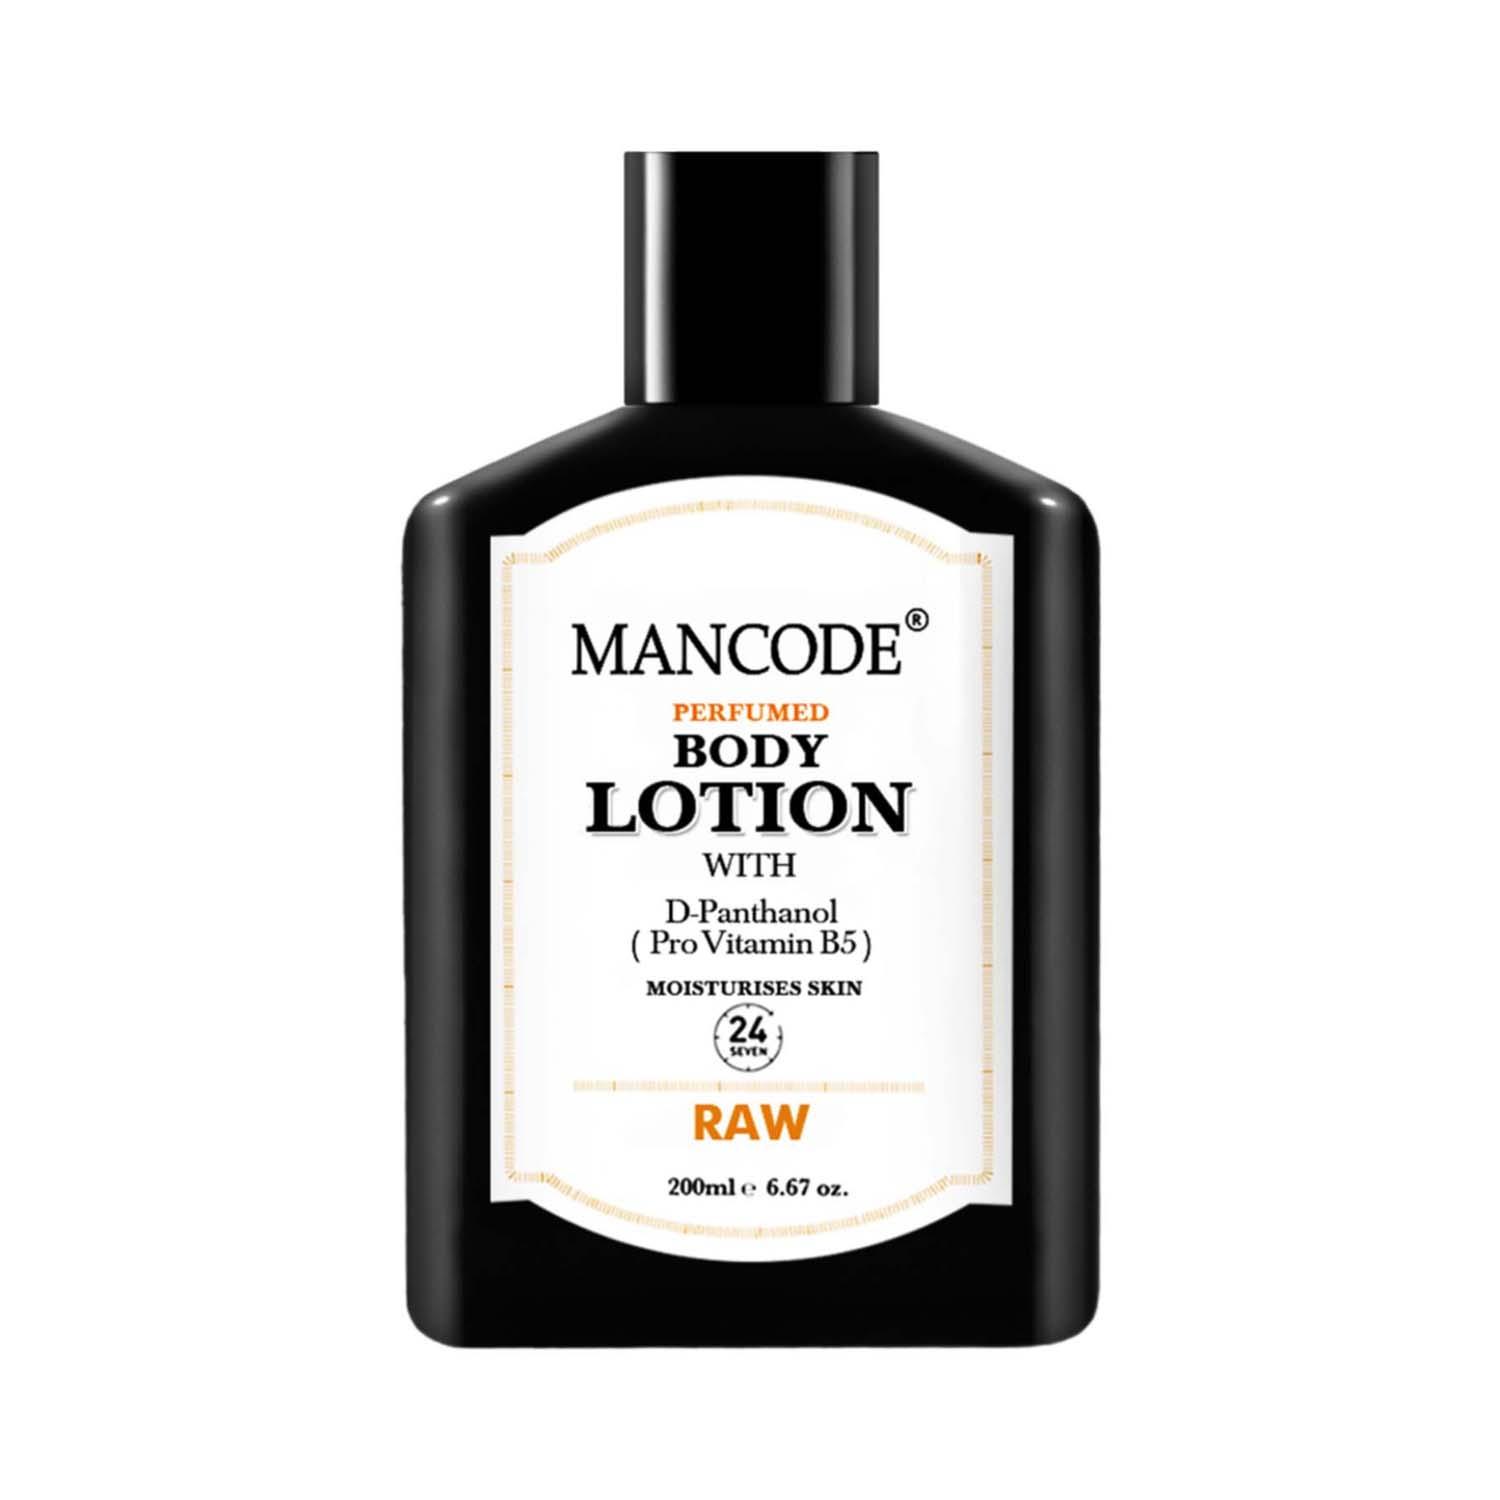 Mancode Raw Perfume Body Lotion For Men (200 ml)